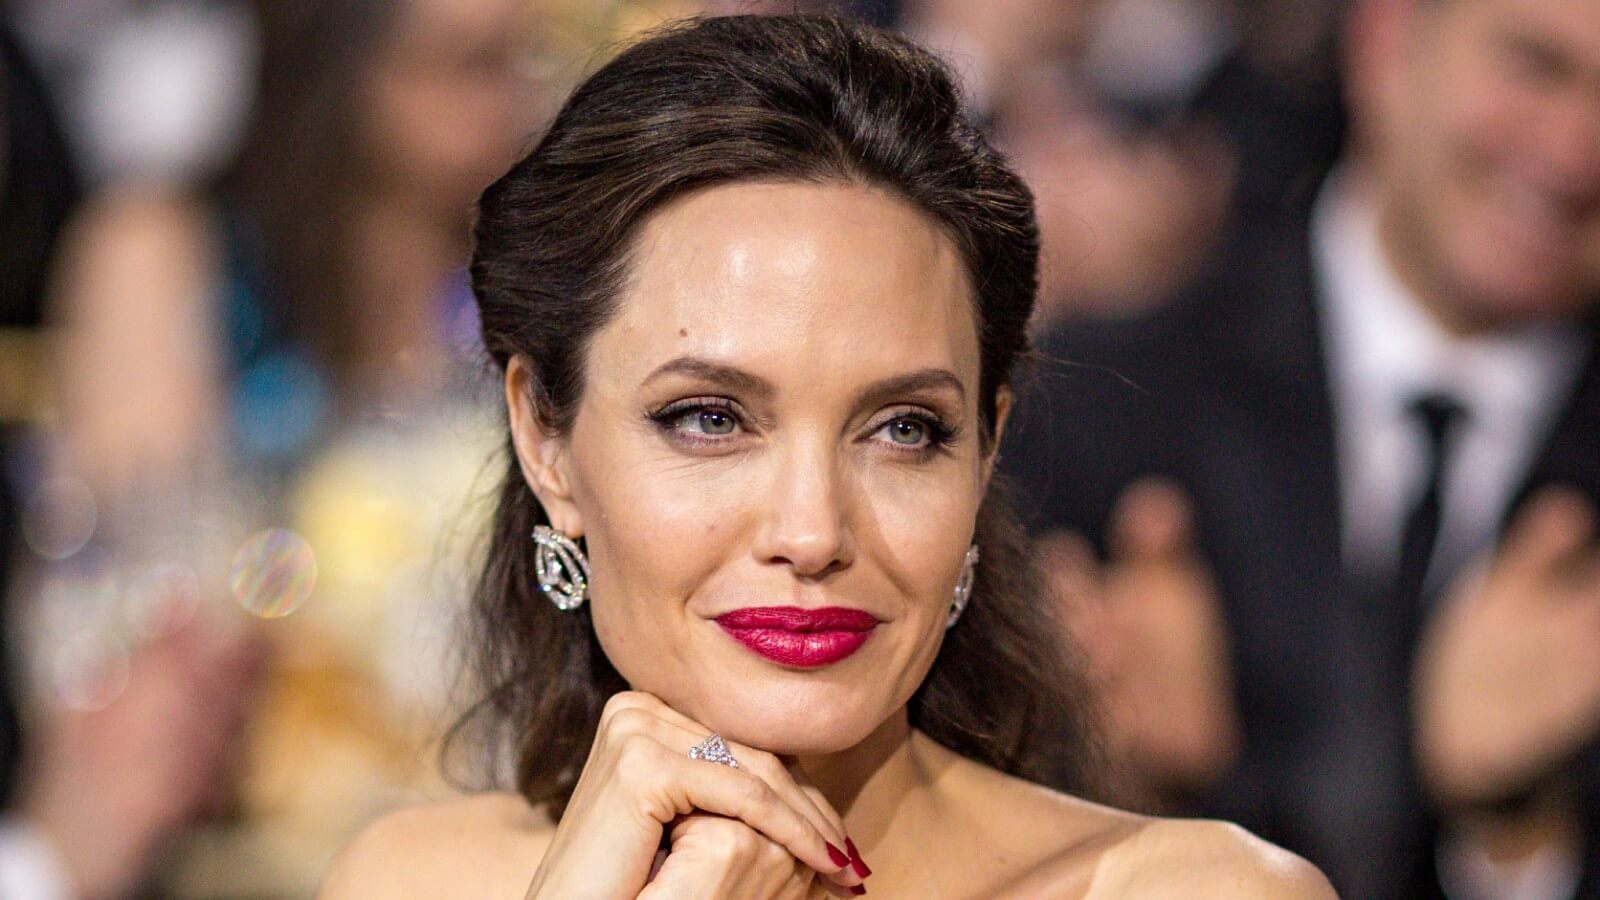 Angelina Jolie claims Brad Pitt as an abuser